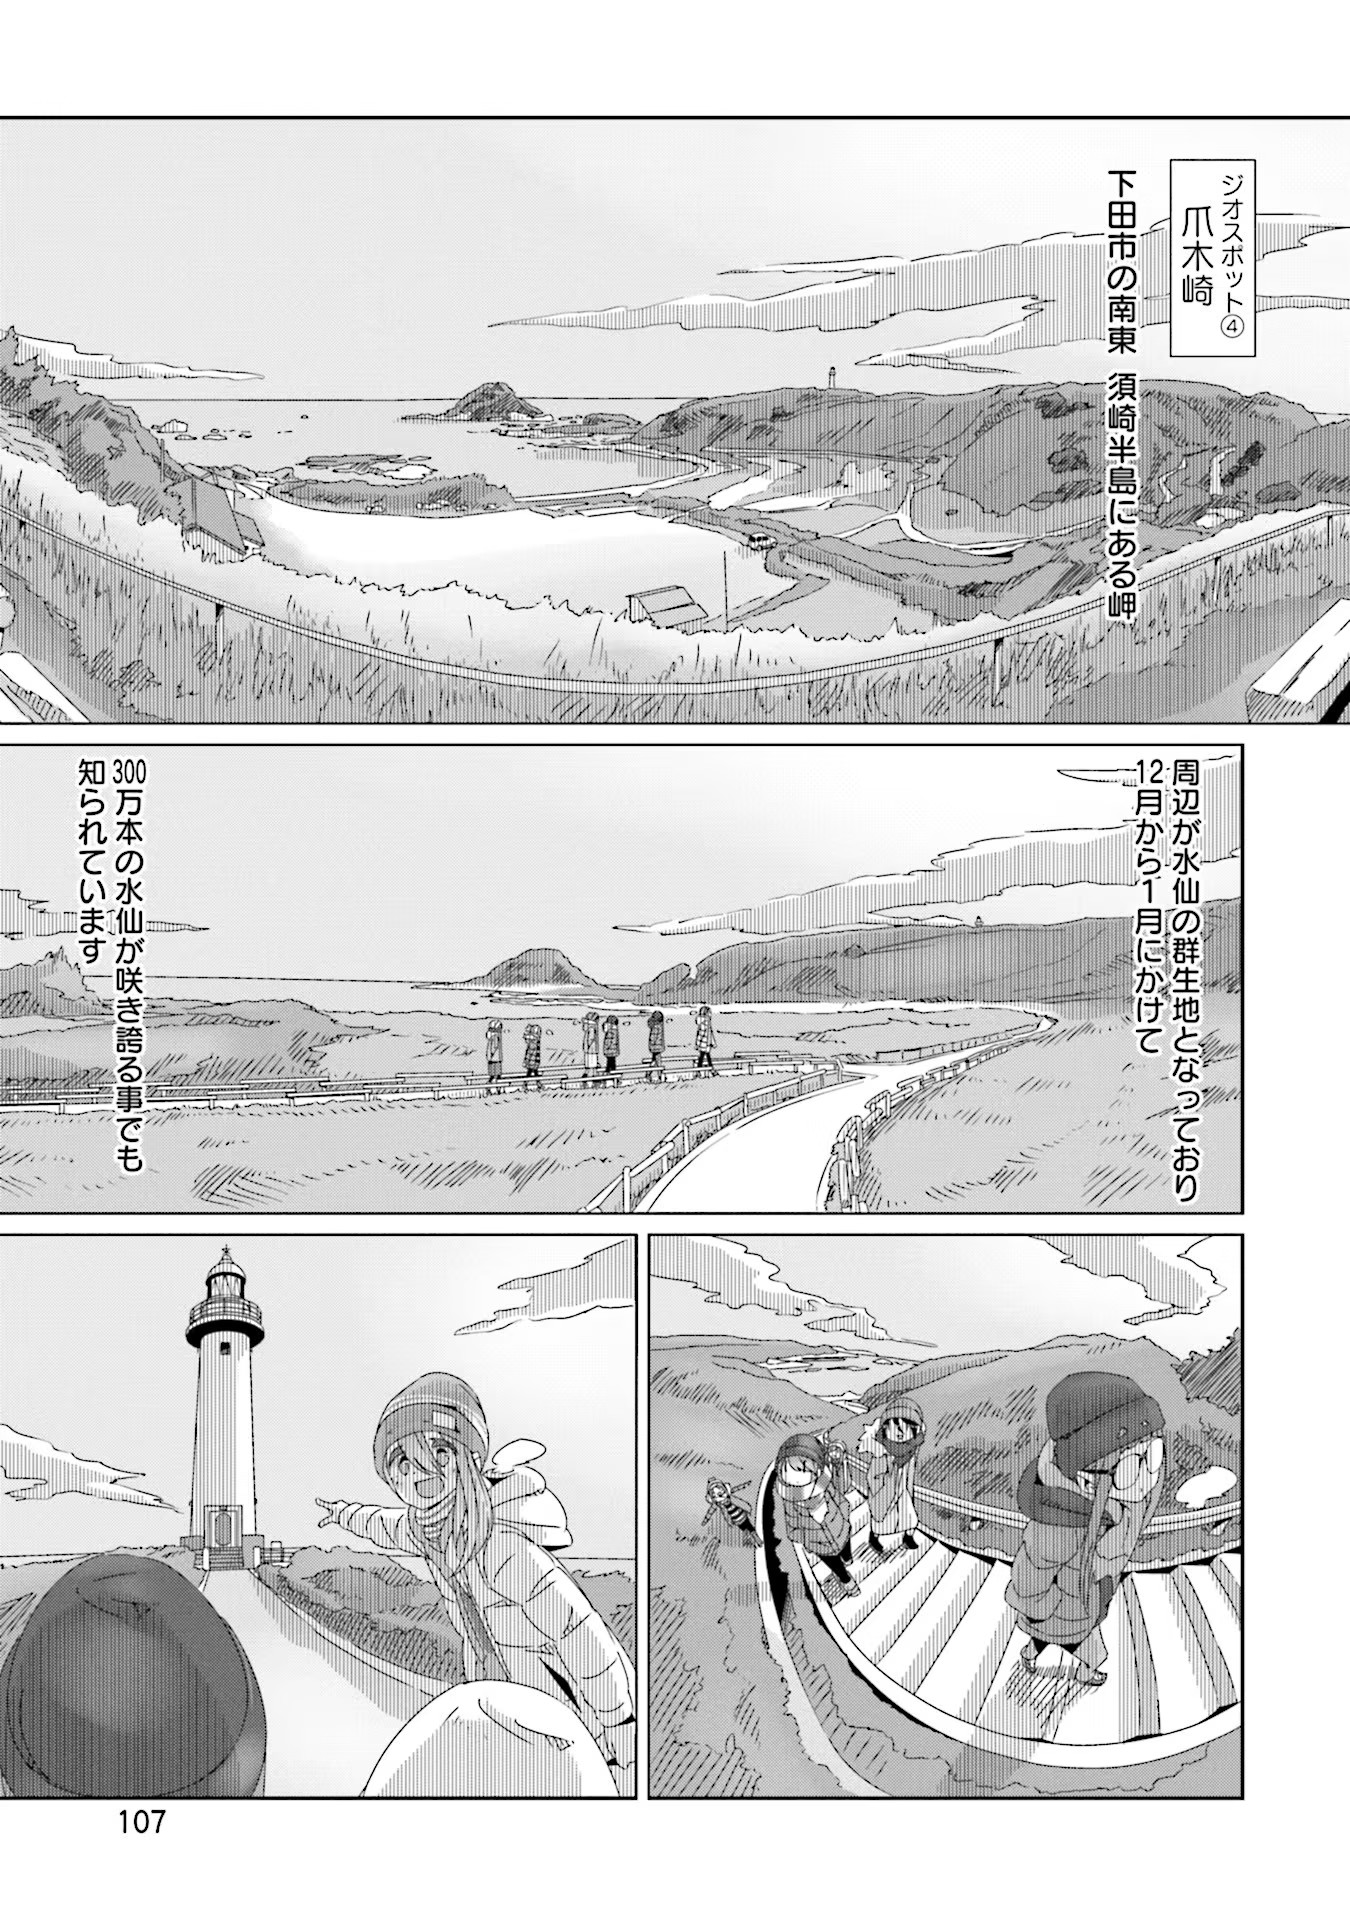 Yuru Camp - Chapter 45 - Page 1